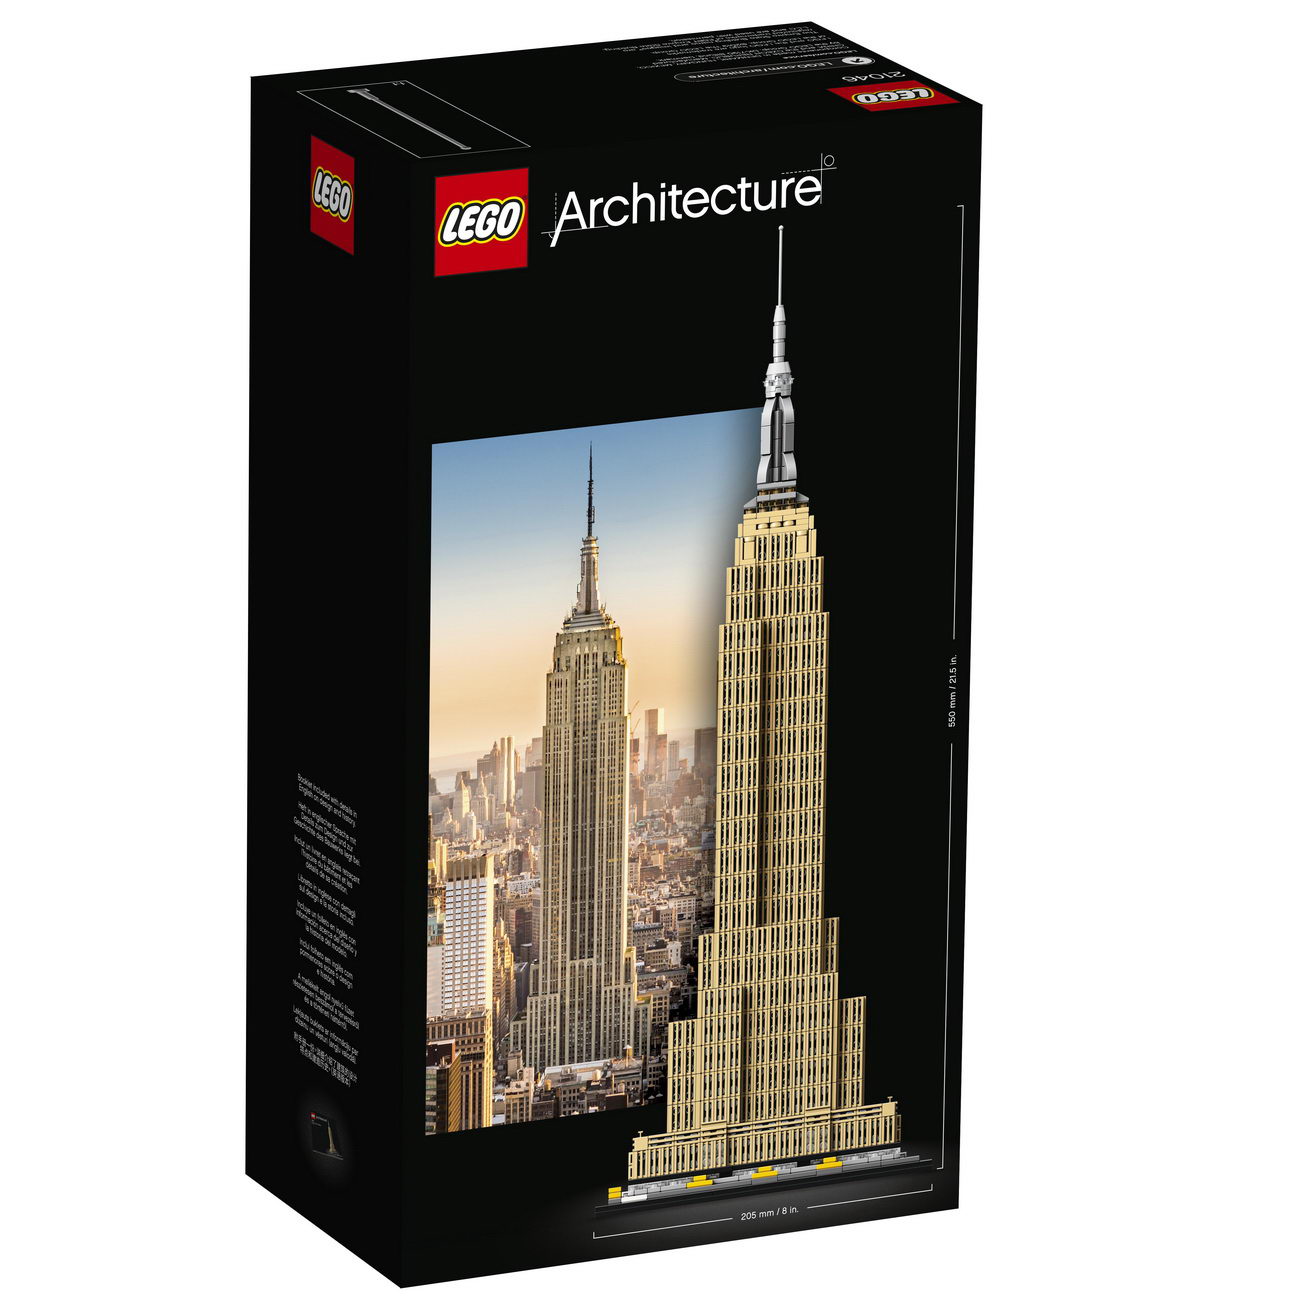 LEGO Architecture 21046 - Empire State Building